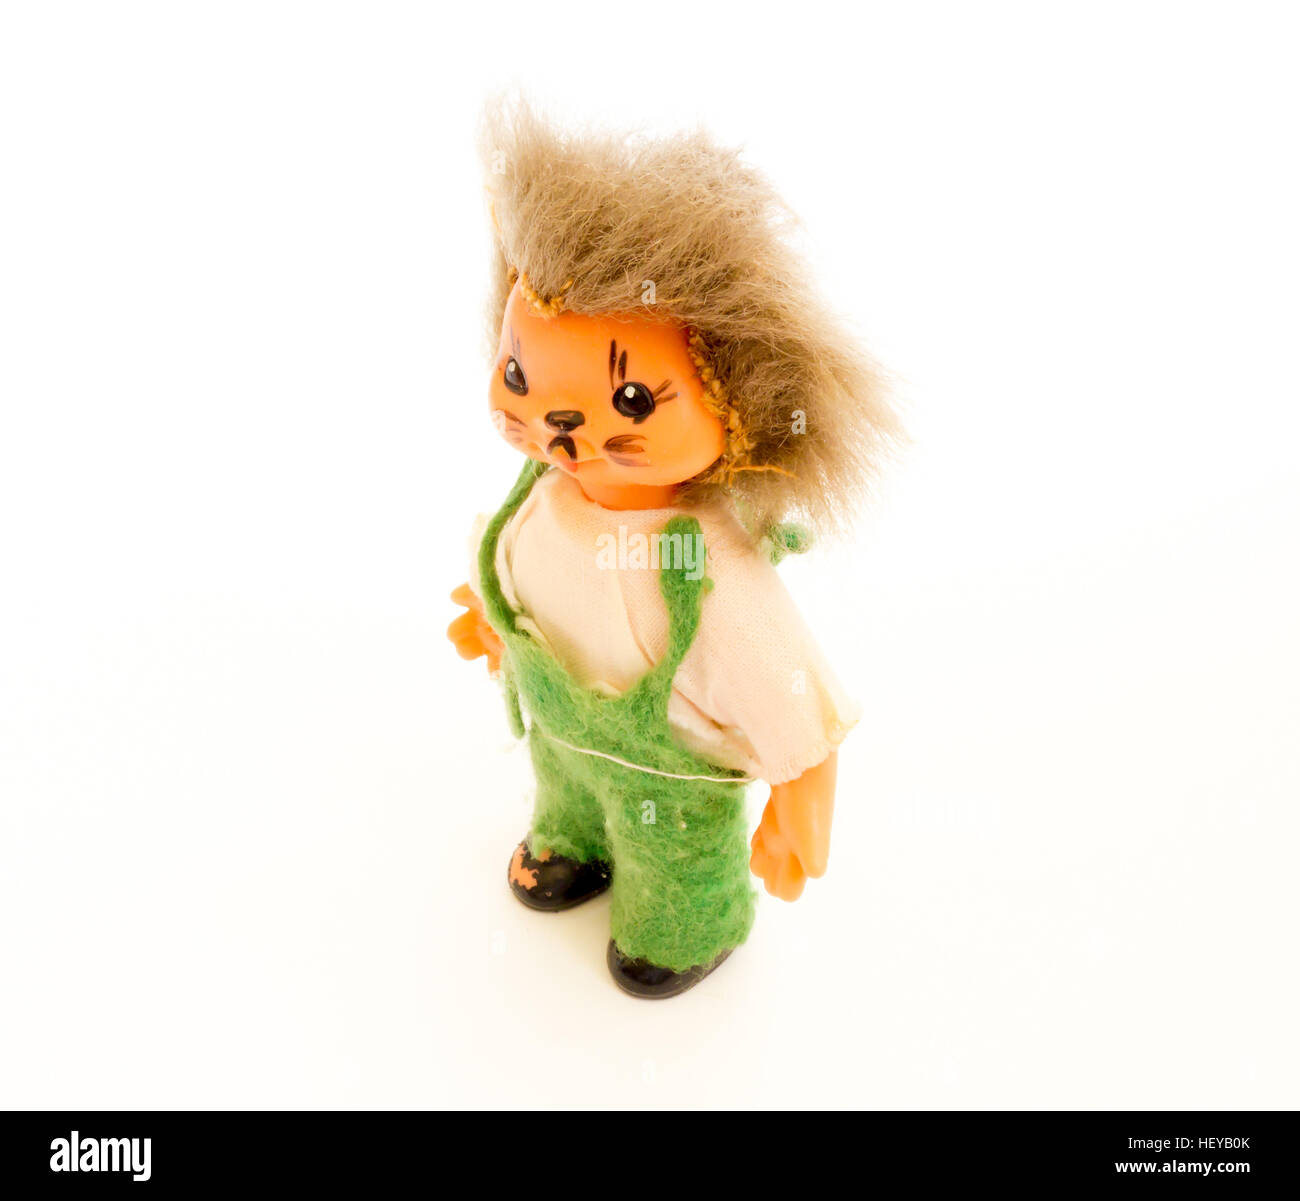 The Miniature toy dog. Stock Photo